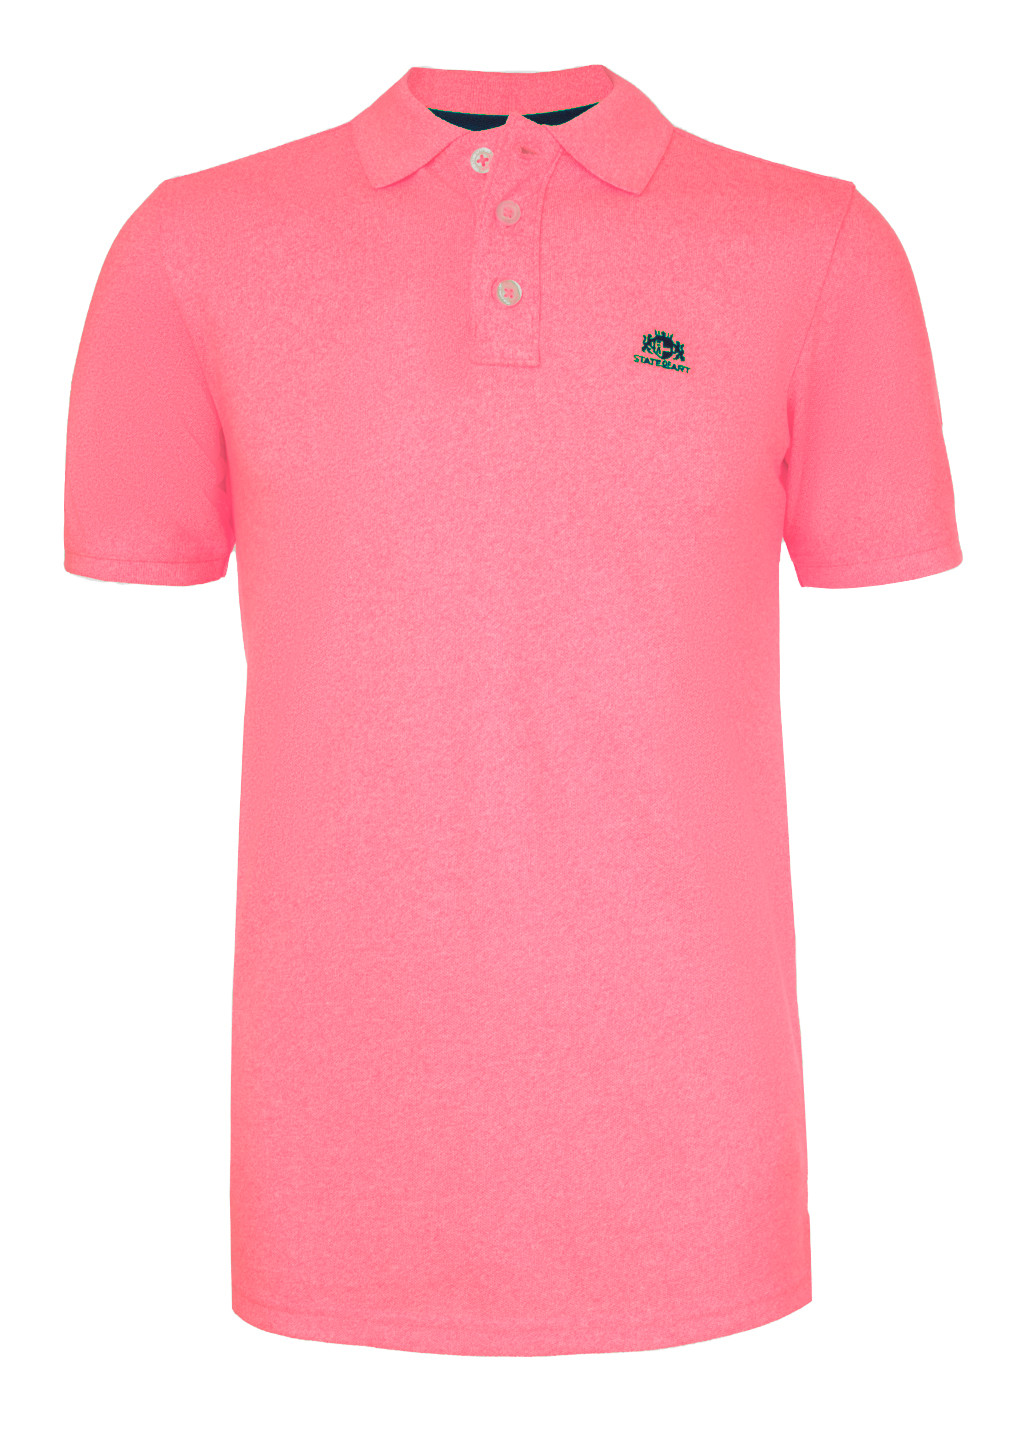 Розовая футболка-мужская футболка-поло с логотипом для мужчин State of Art